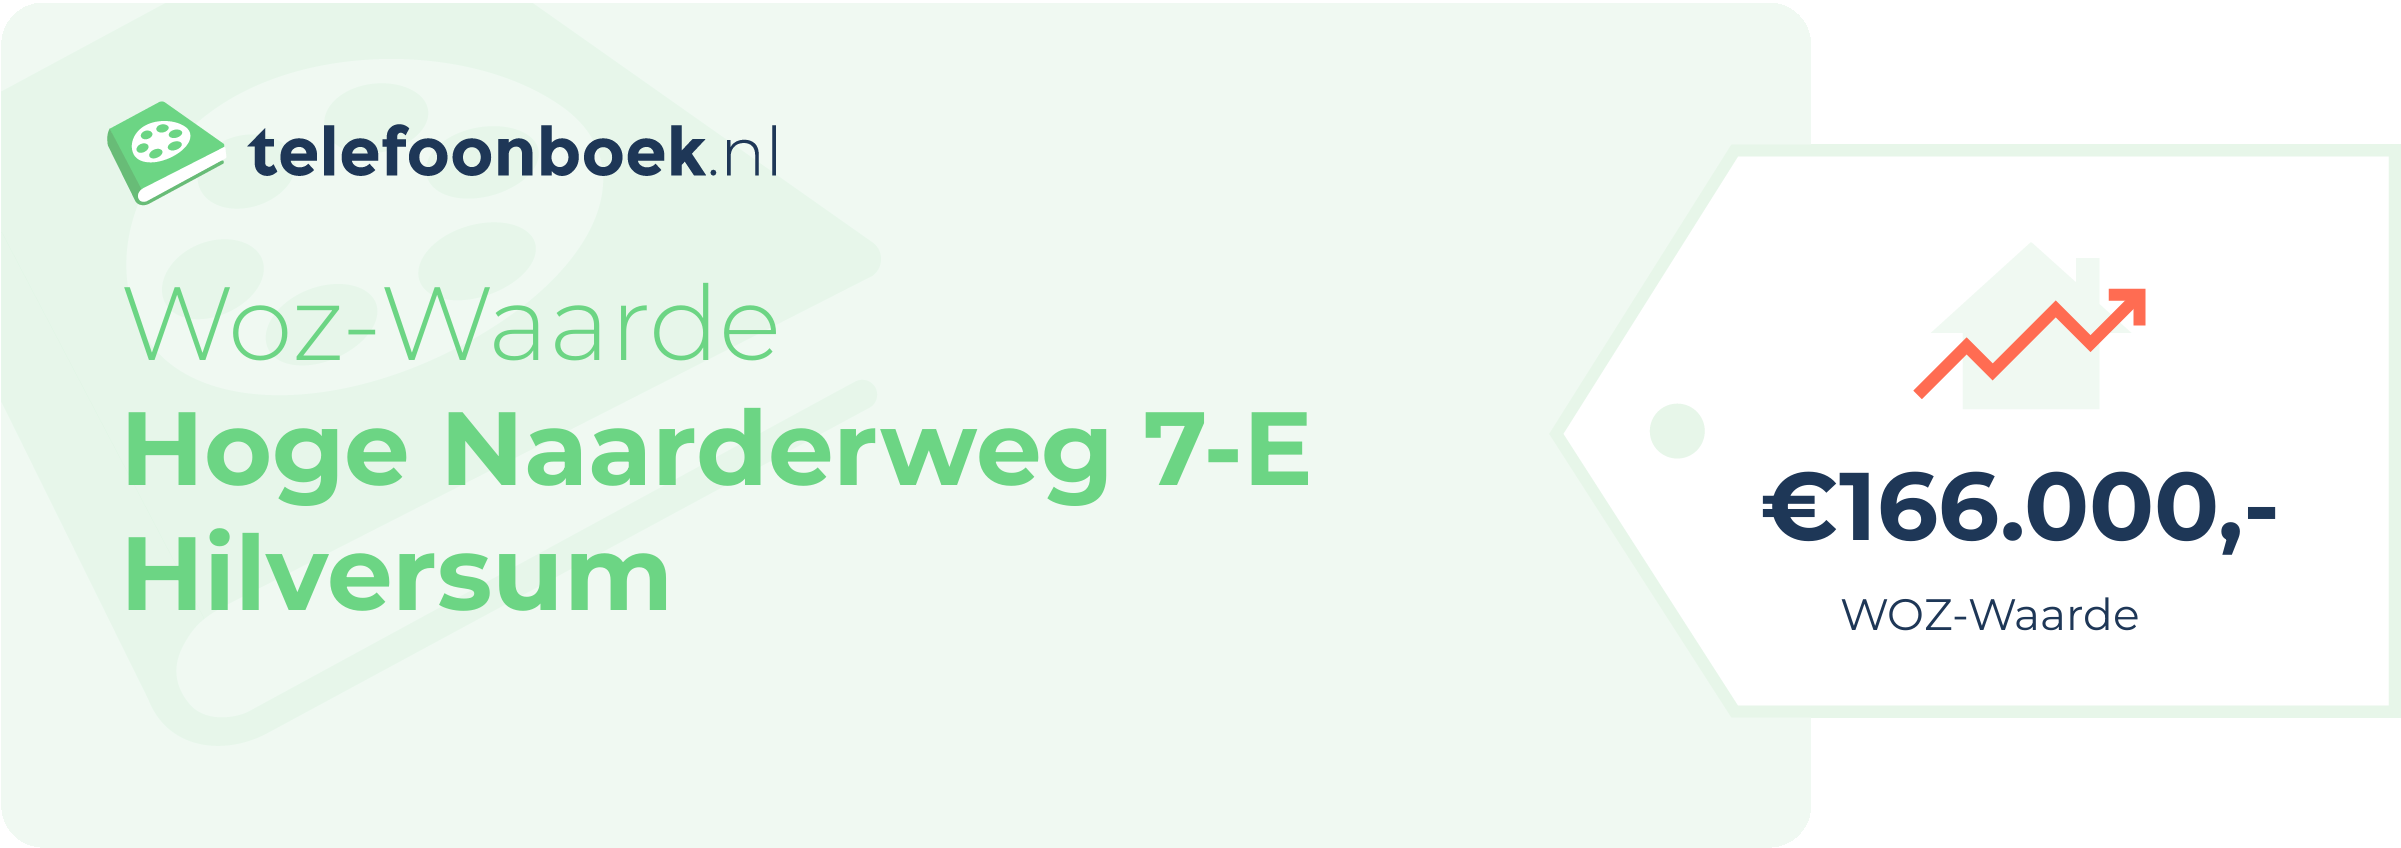 WOZ-waarde Hoge Naarderweg 7-E Hilversum